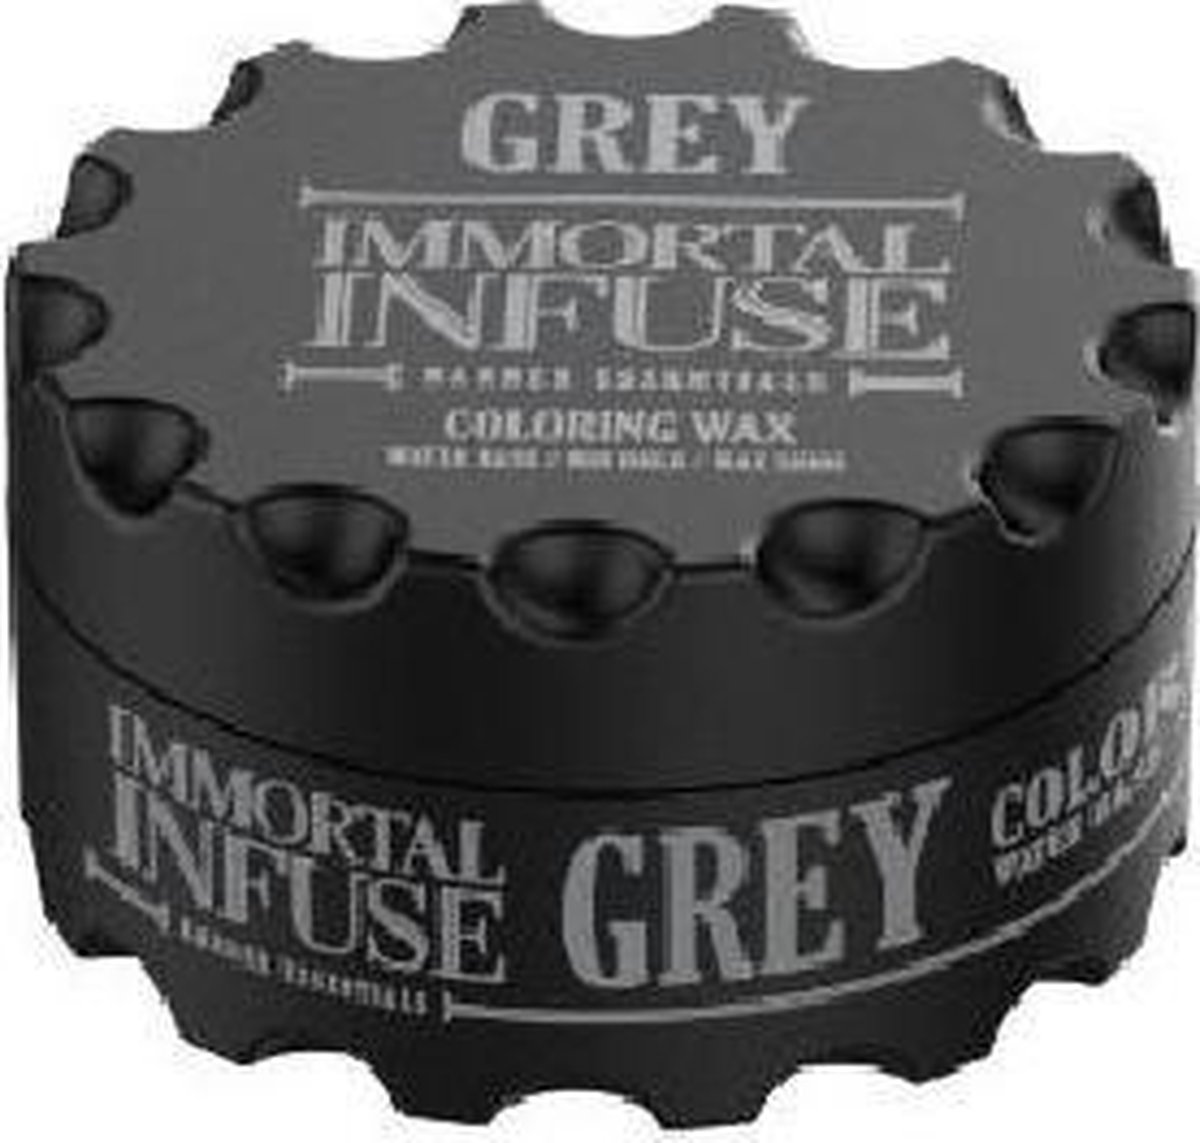 Immortal Infuse Coloring Wax Grey 100ml